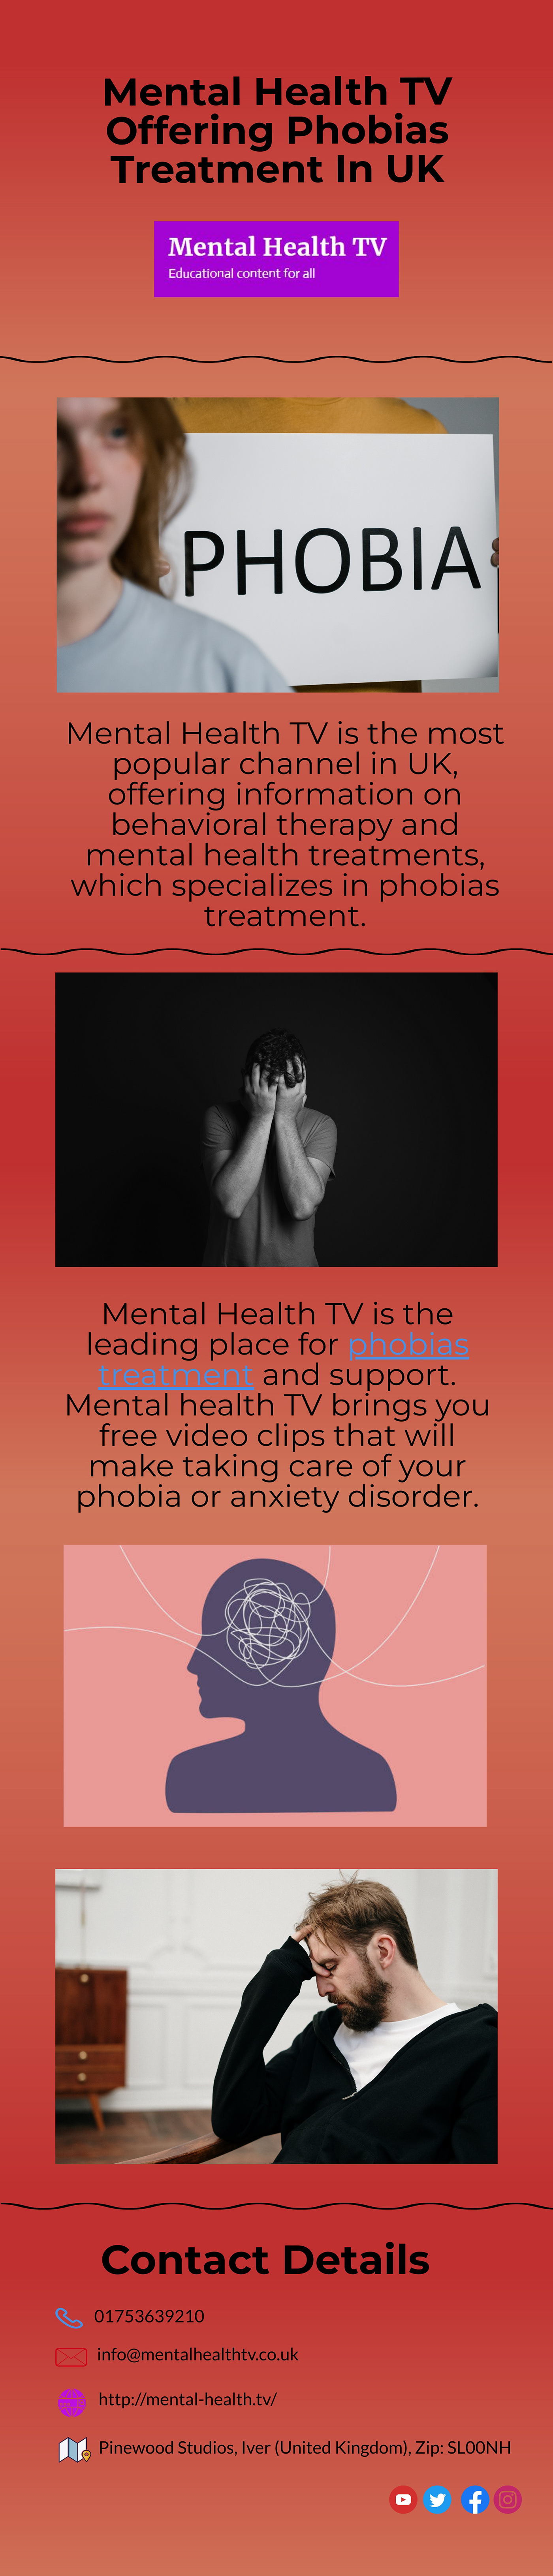 Mental health treatment, Mental Health Education, Phobia treatment